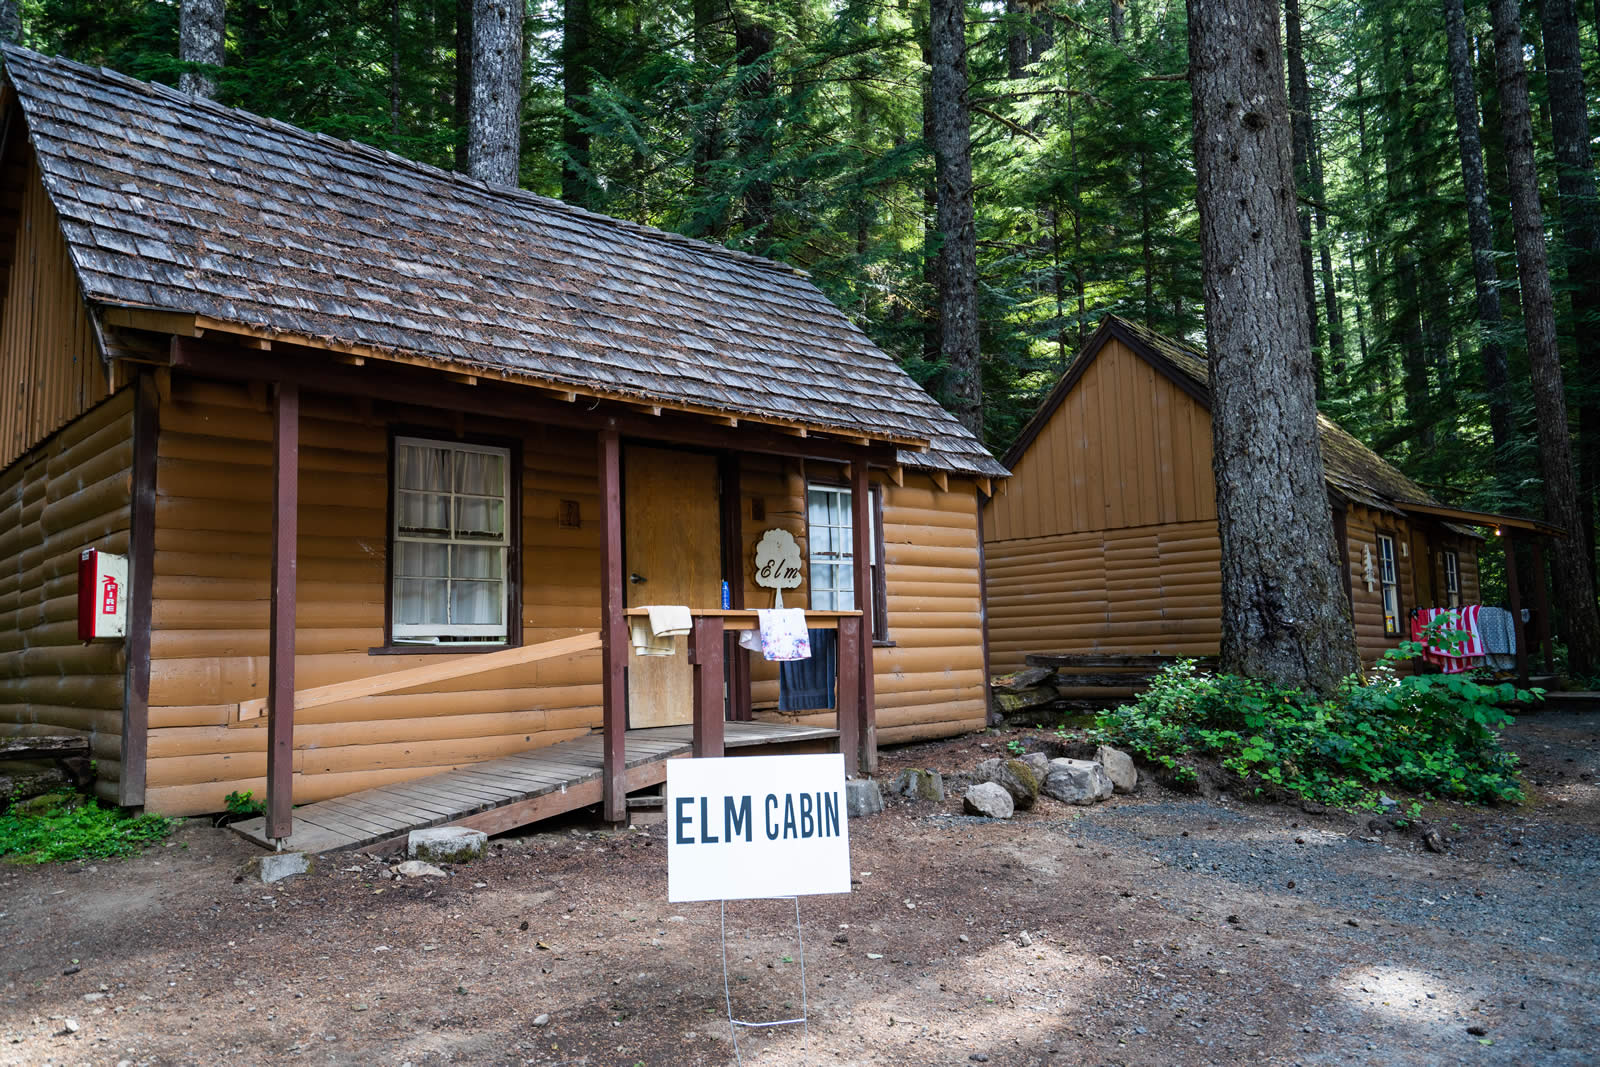 Elm Cabin